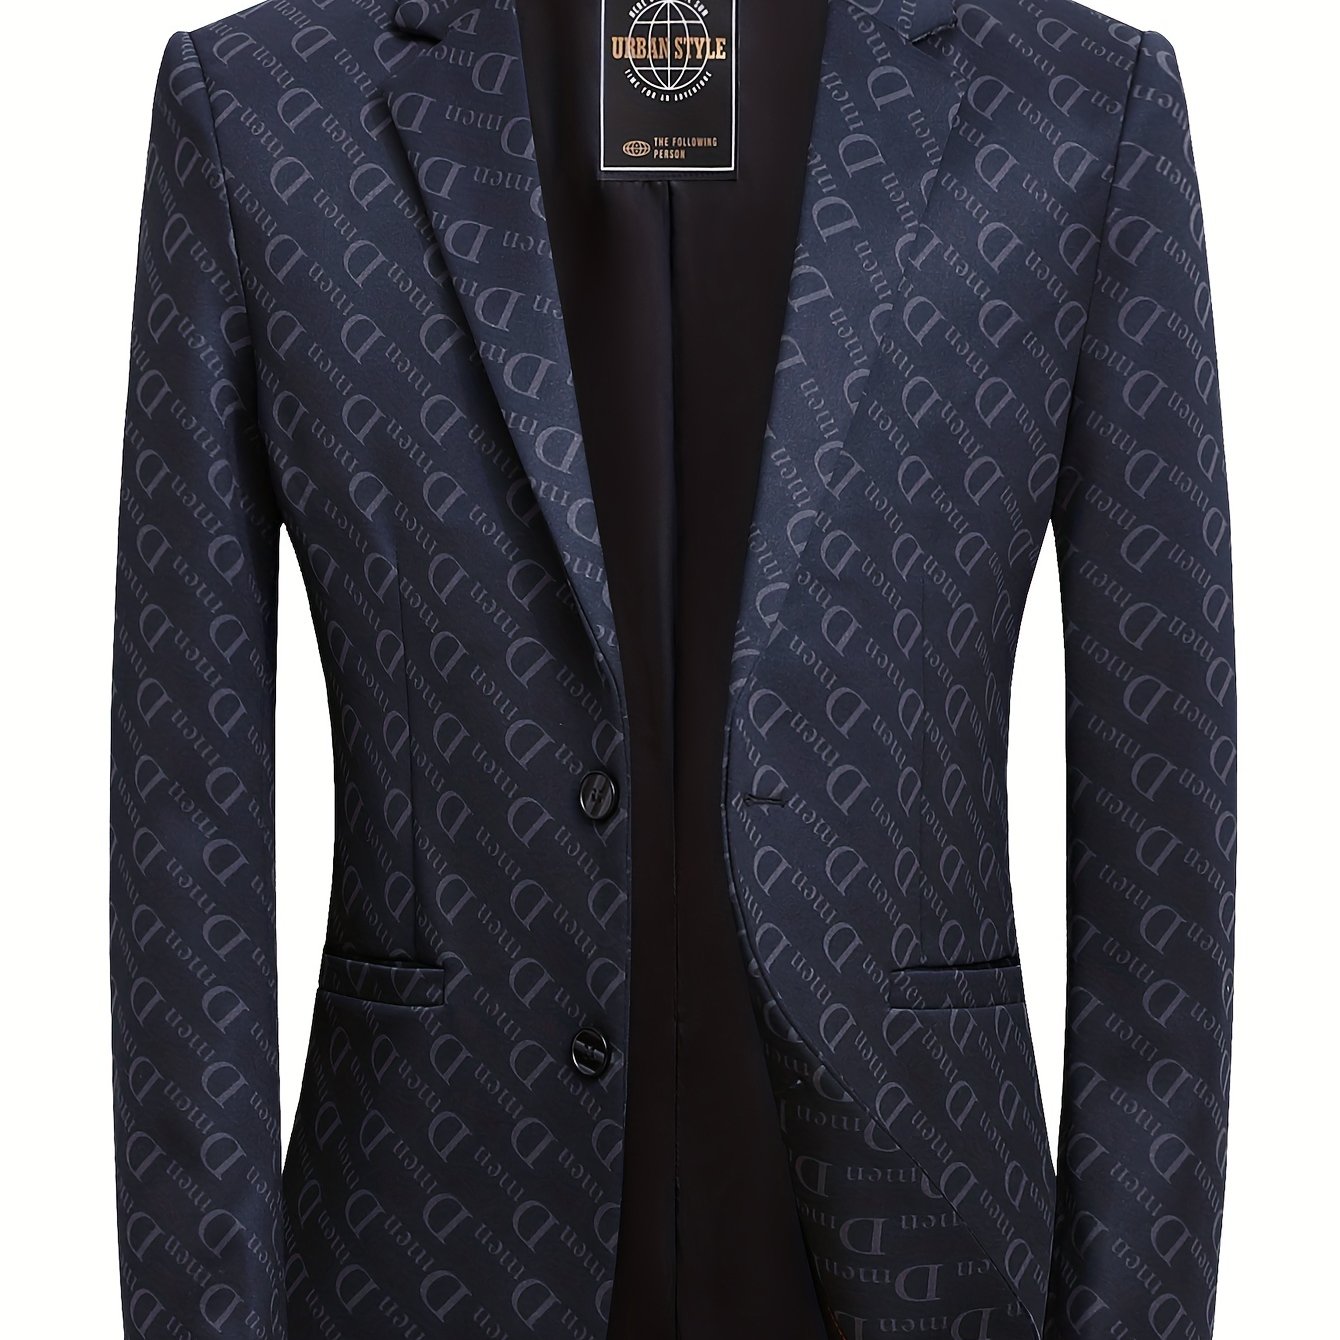 Letter Print Two Button Blazer, Men's Semi-formal Suit Jacket For